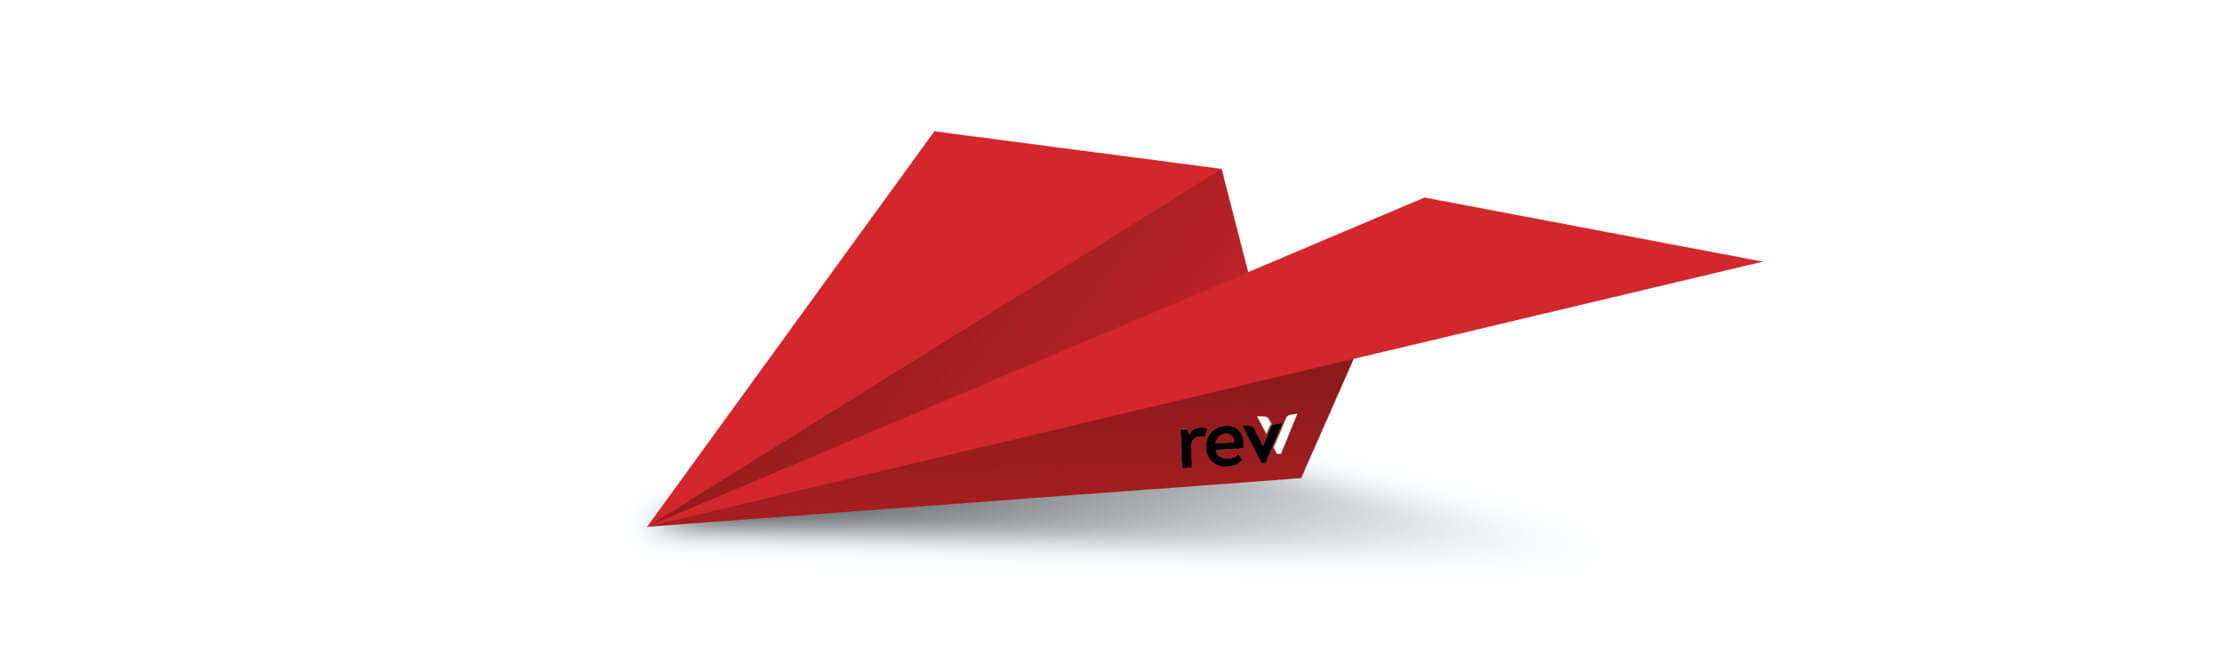 revv aviation red paper airplane